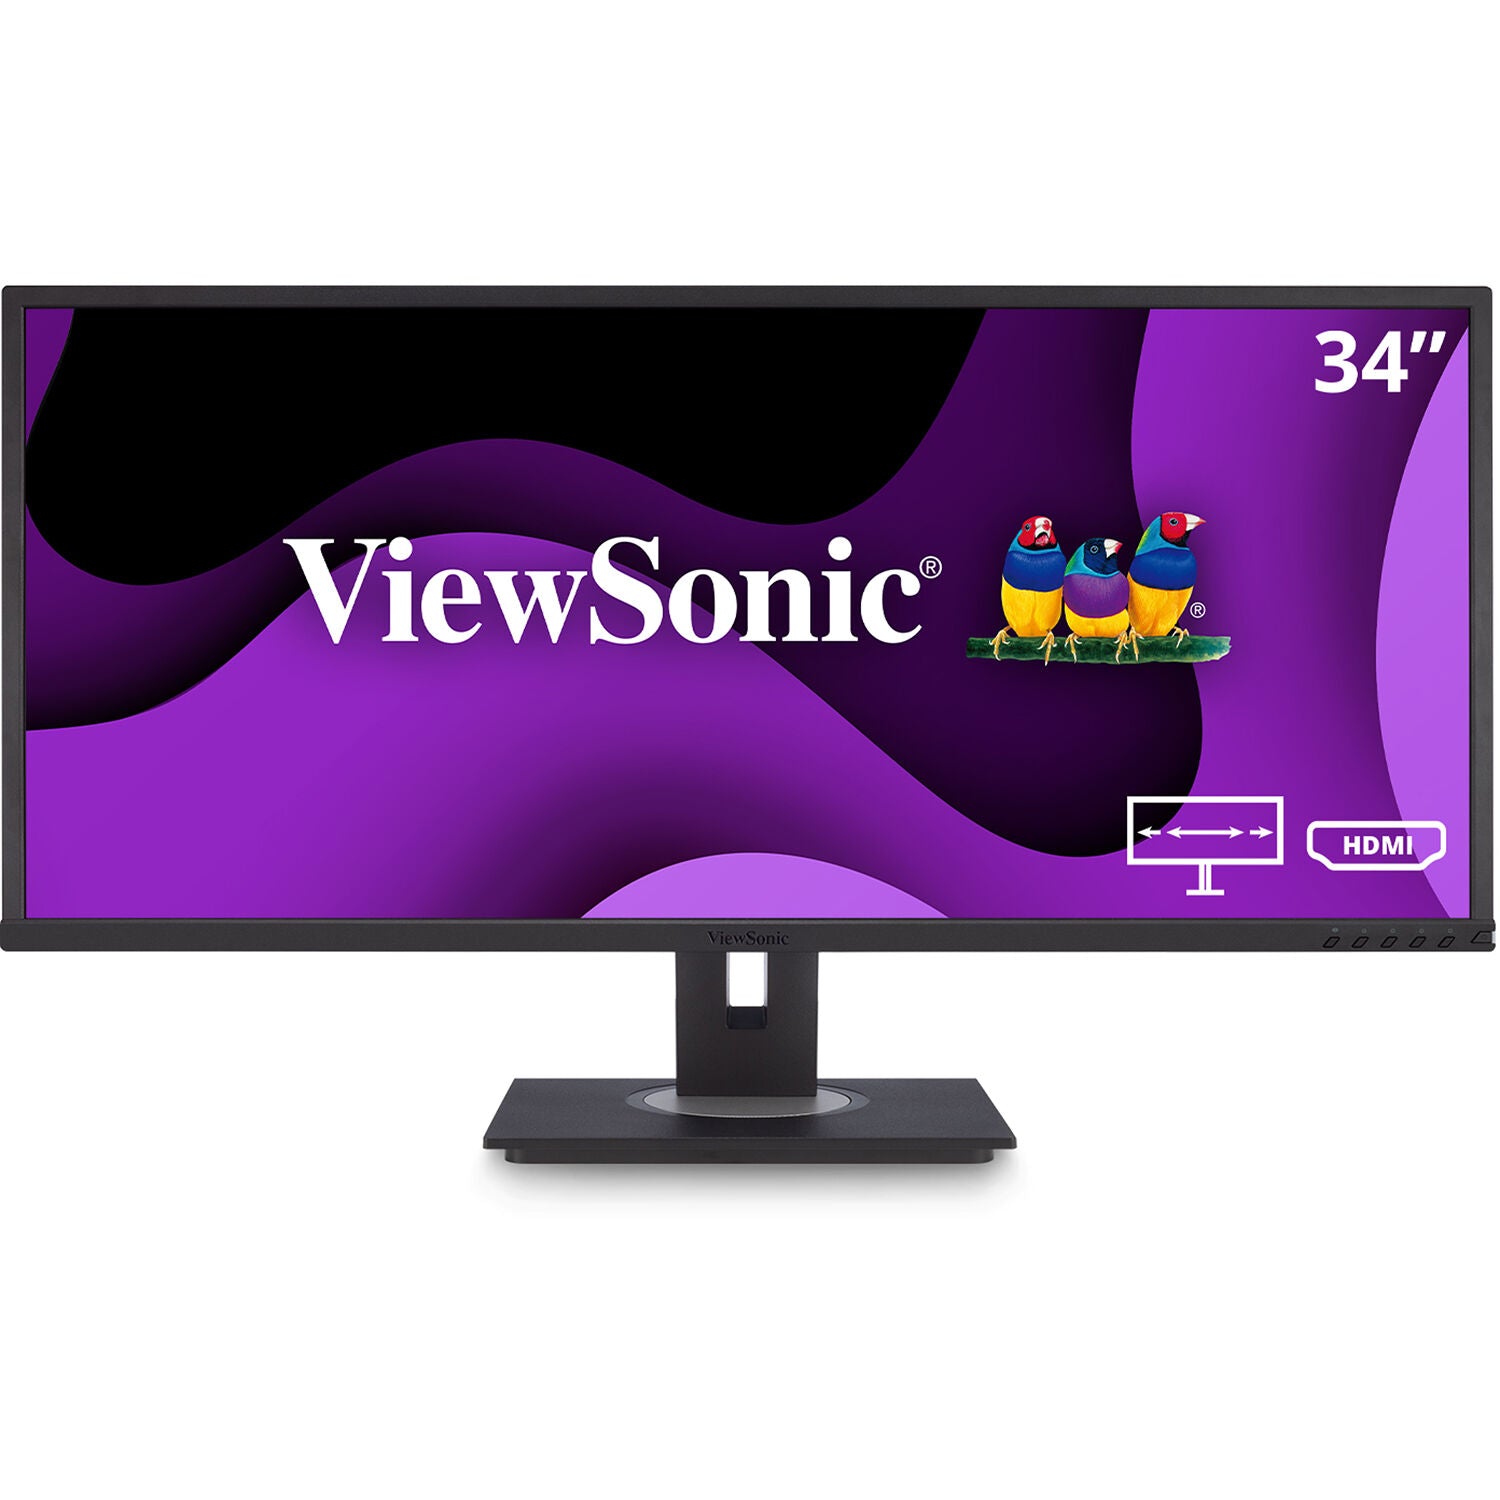 ViewSonic VG3448-R 34" Ultra-Wide 21:9 WQHD Ergonomic Monitor - C Grade Refurbished